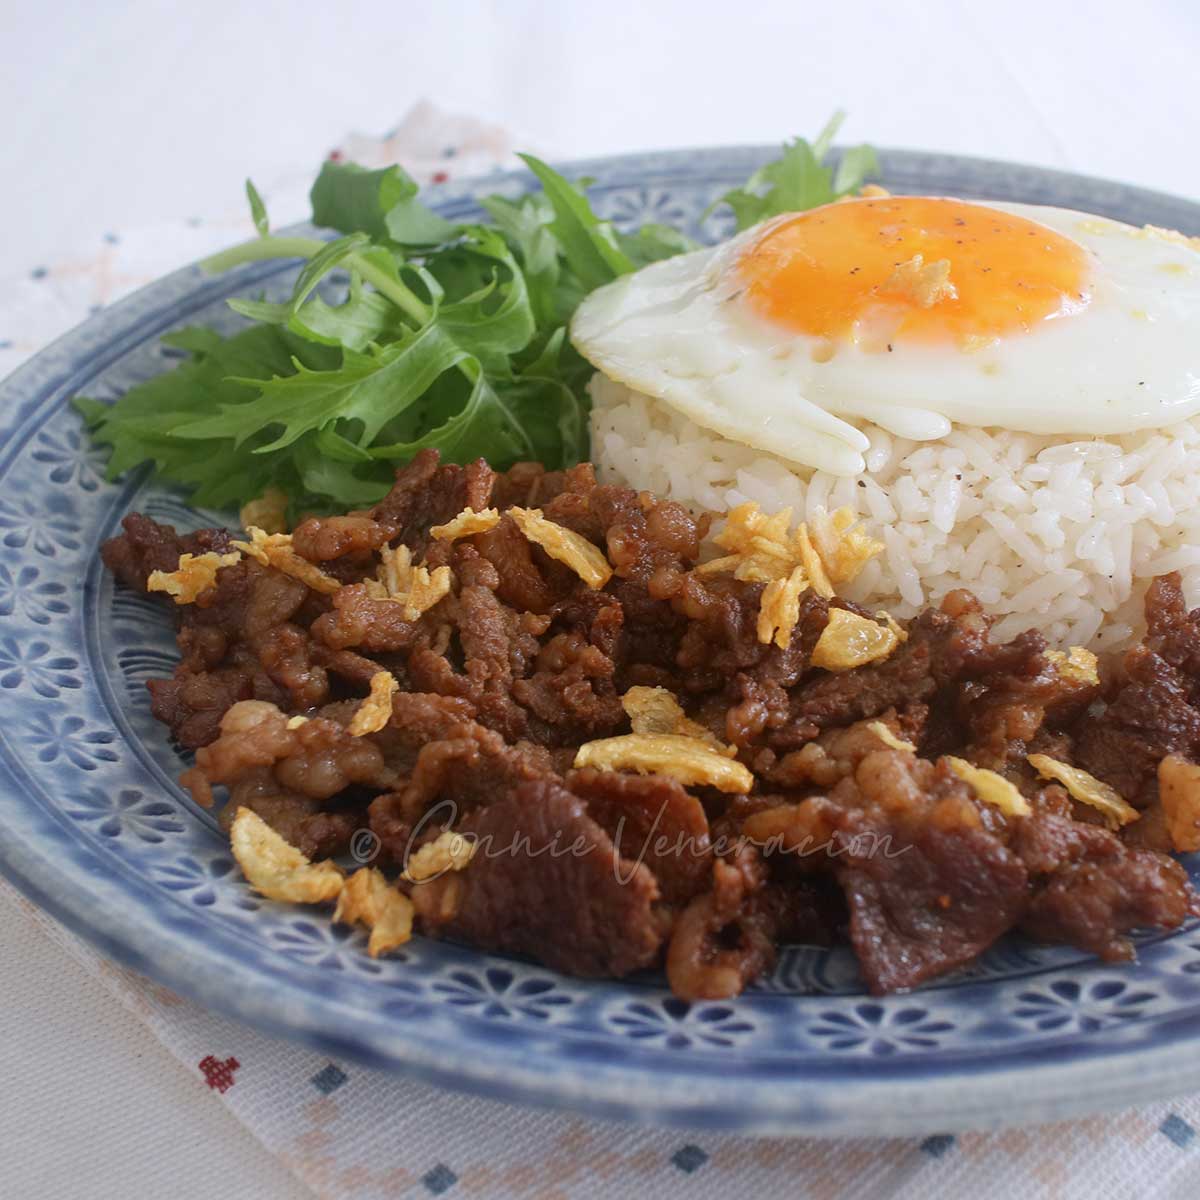 Beef, egg and rice (tapsilog)